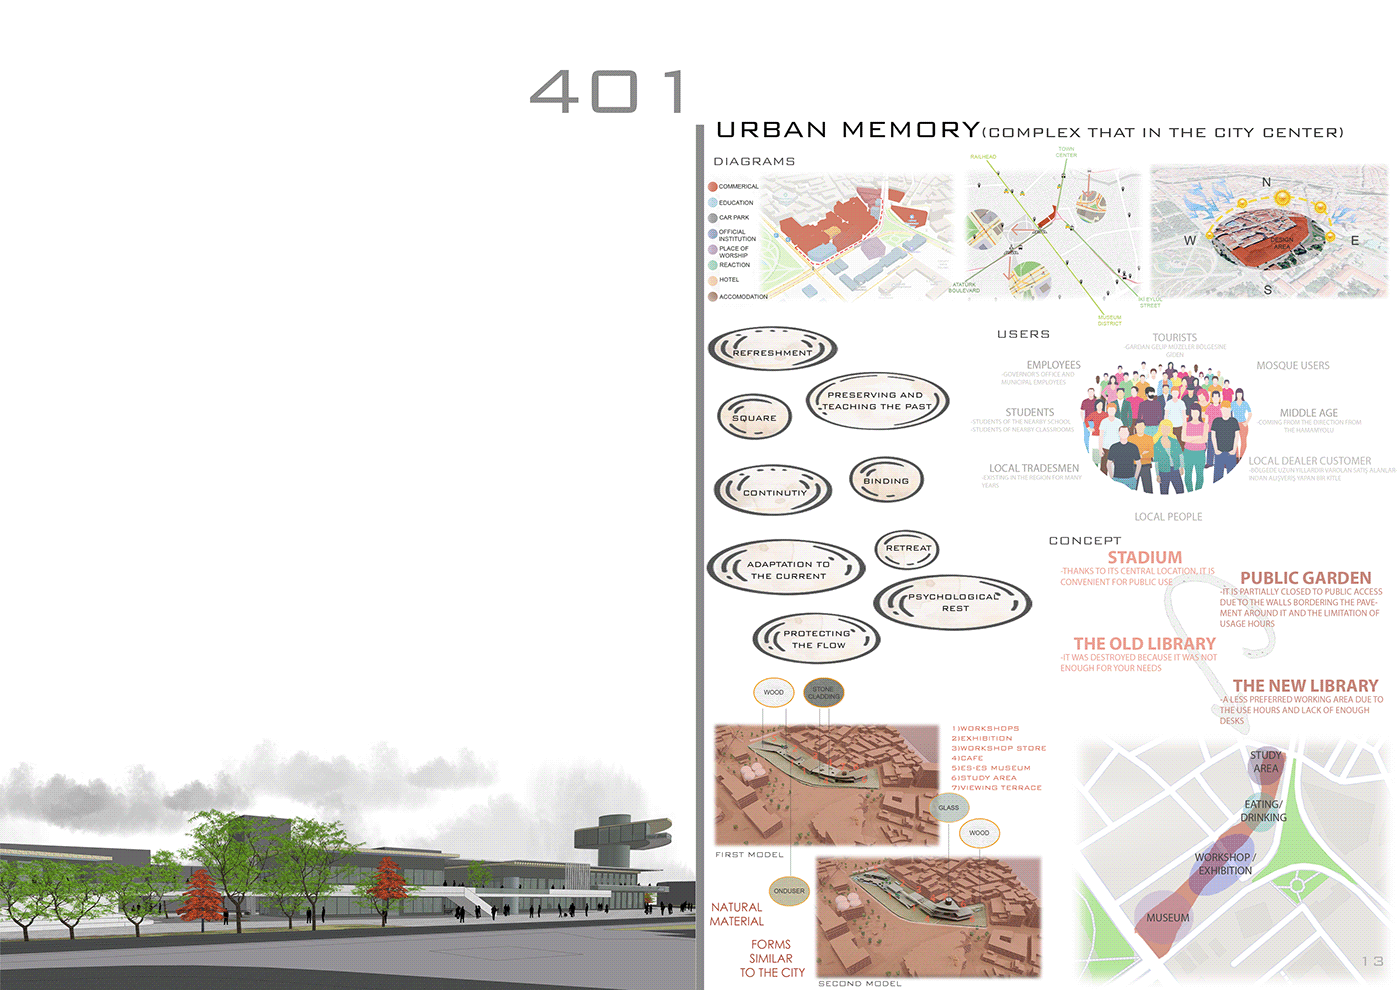 architecture portfolio architectural design architect architectural Archicture schoolproject arch Render visualization